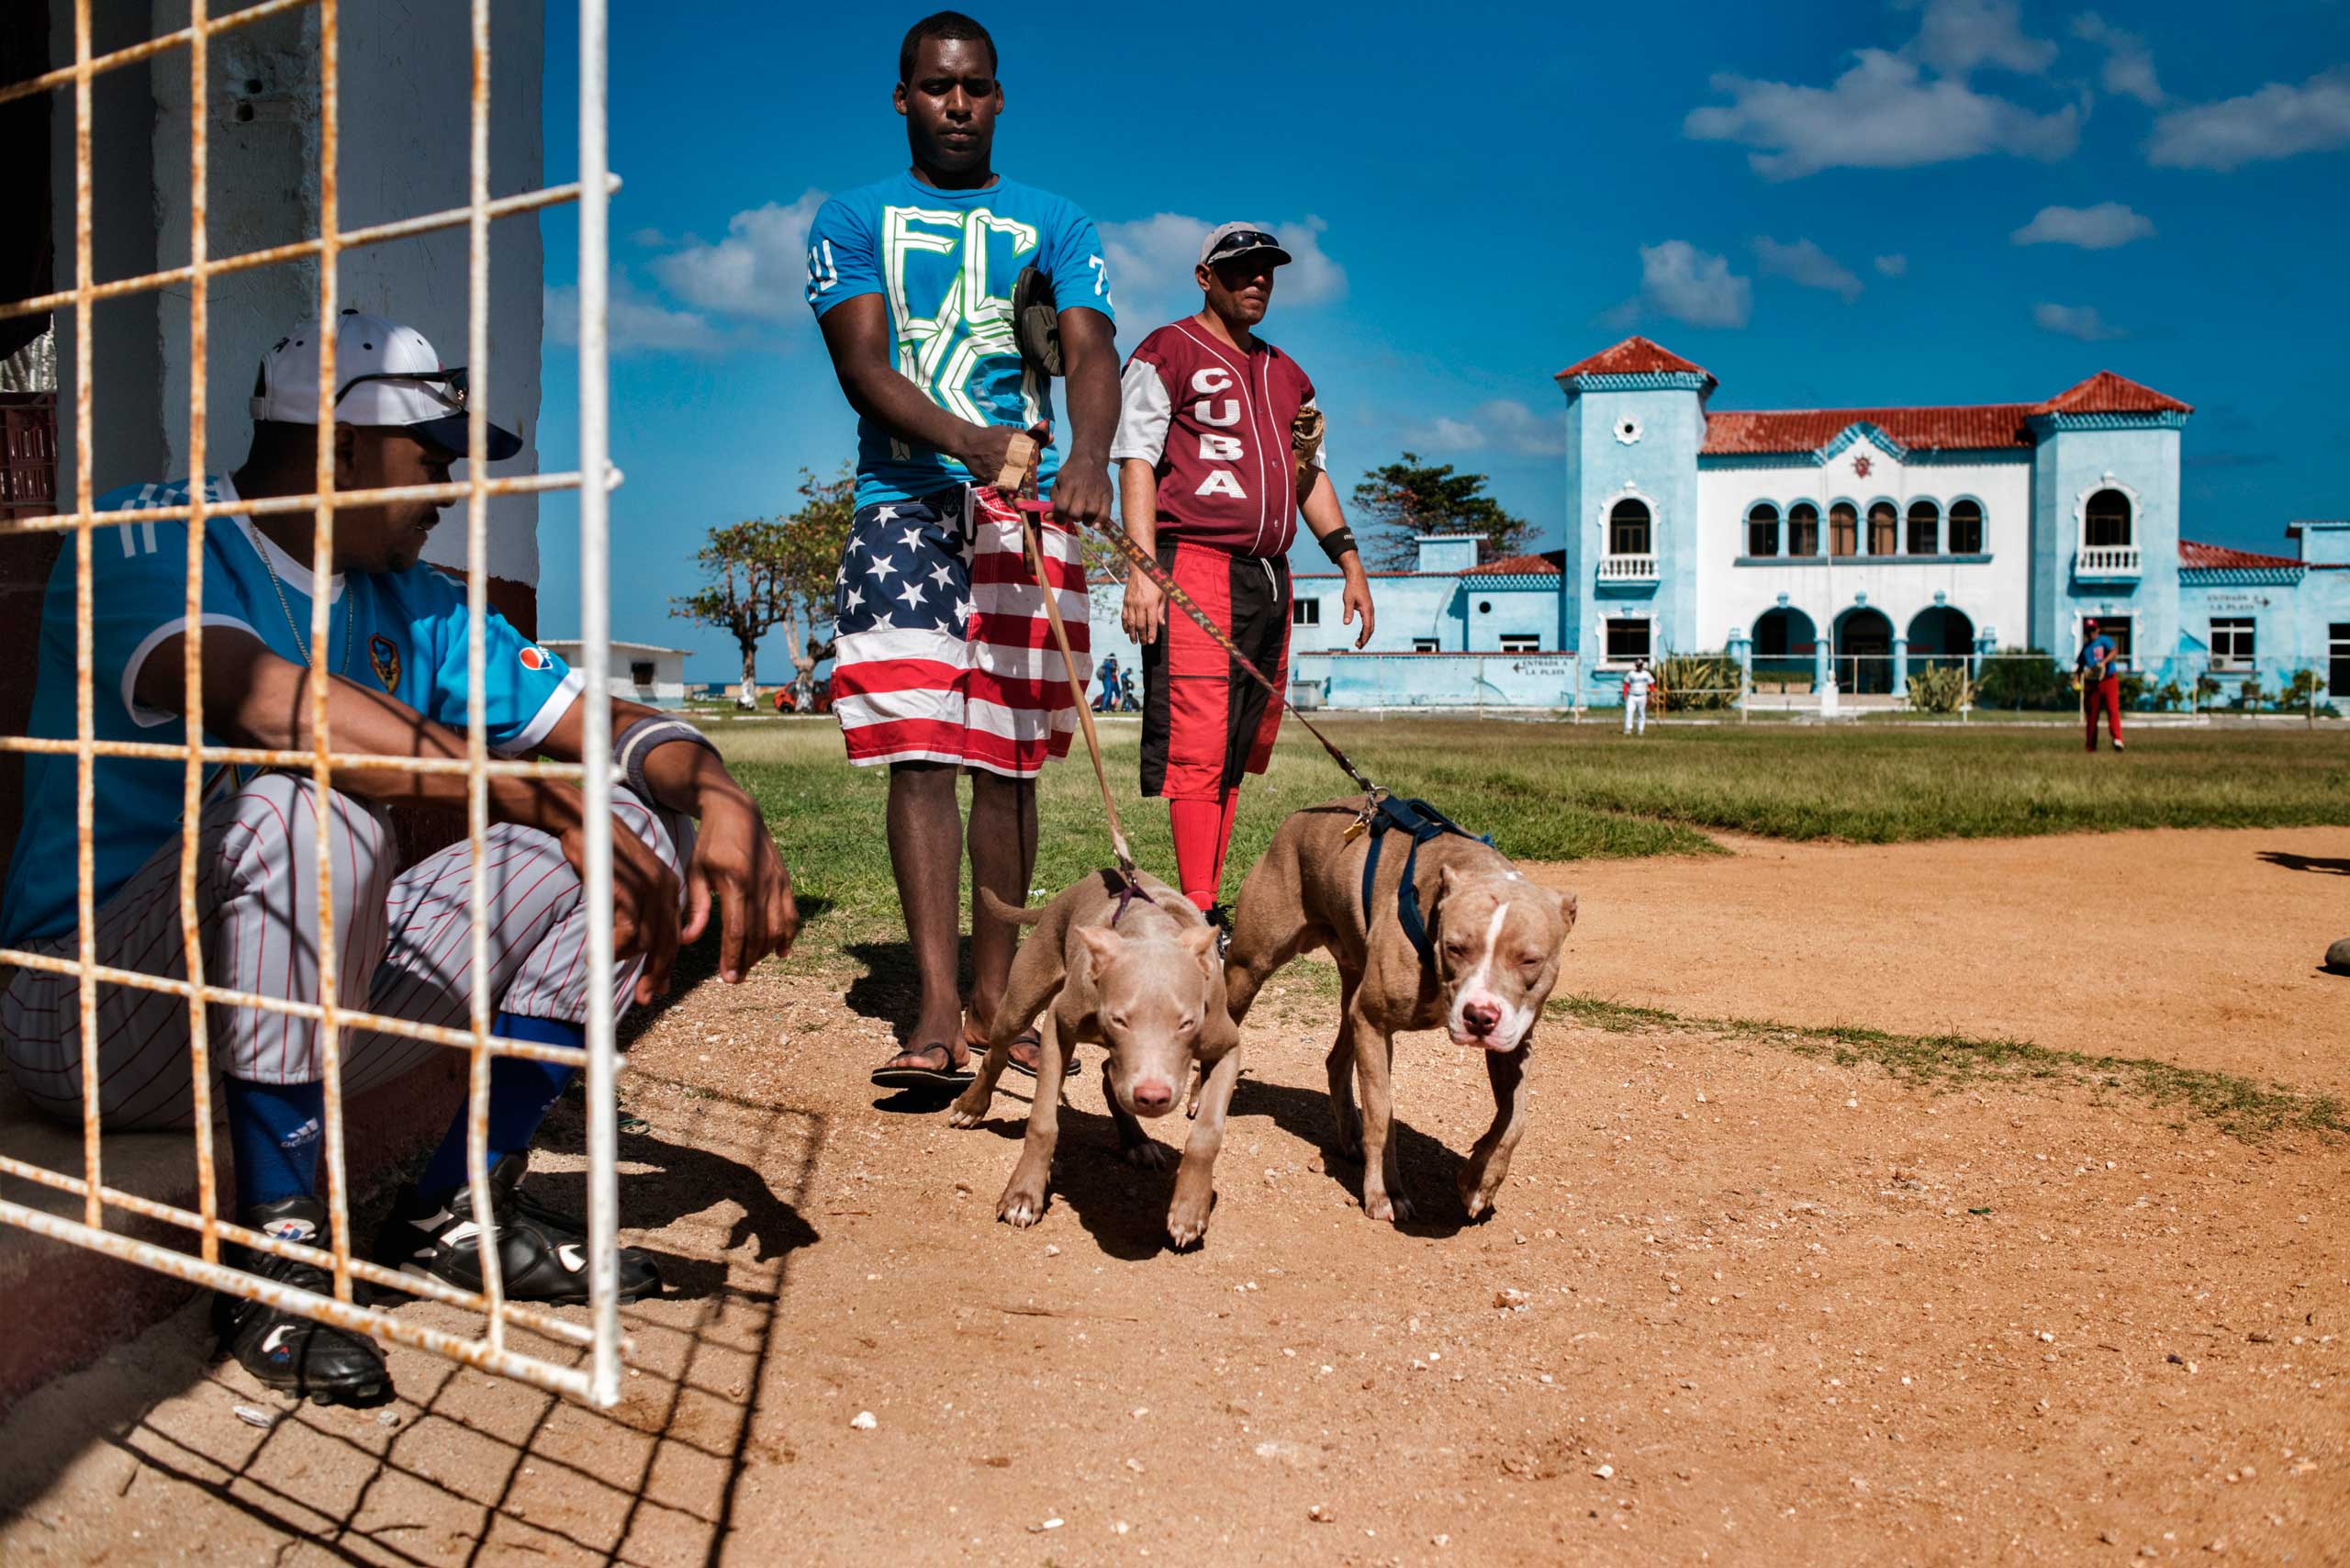 Man wears shorts with the colors of the U.S. flag in Jaimanitas, Cuba, Jan. 2015. (Yuri Kozyrev—NOOR for TIME)